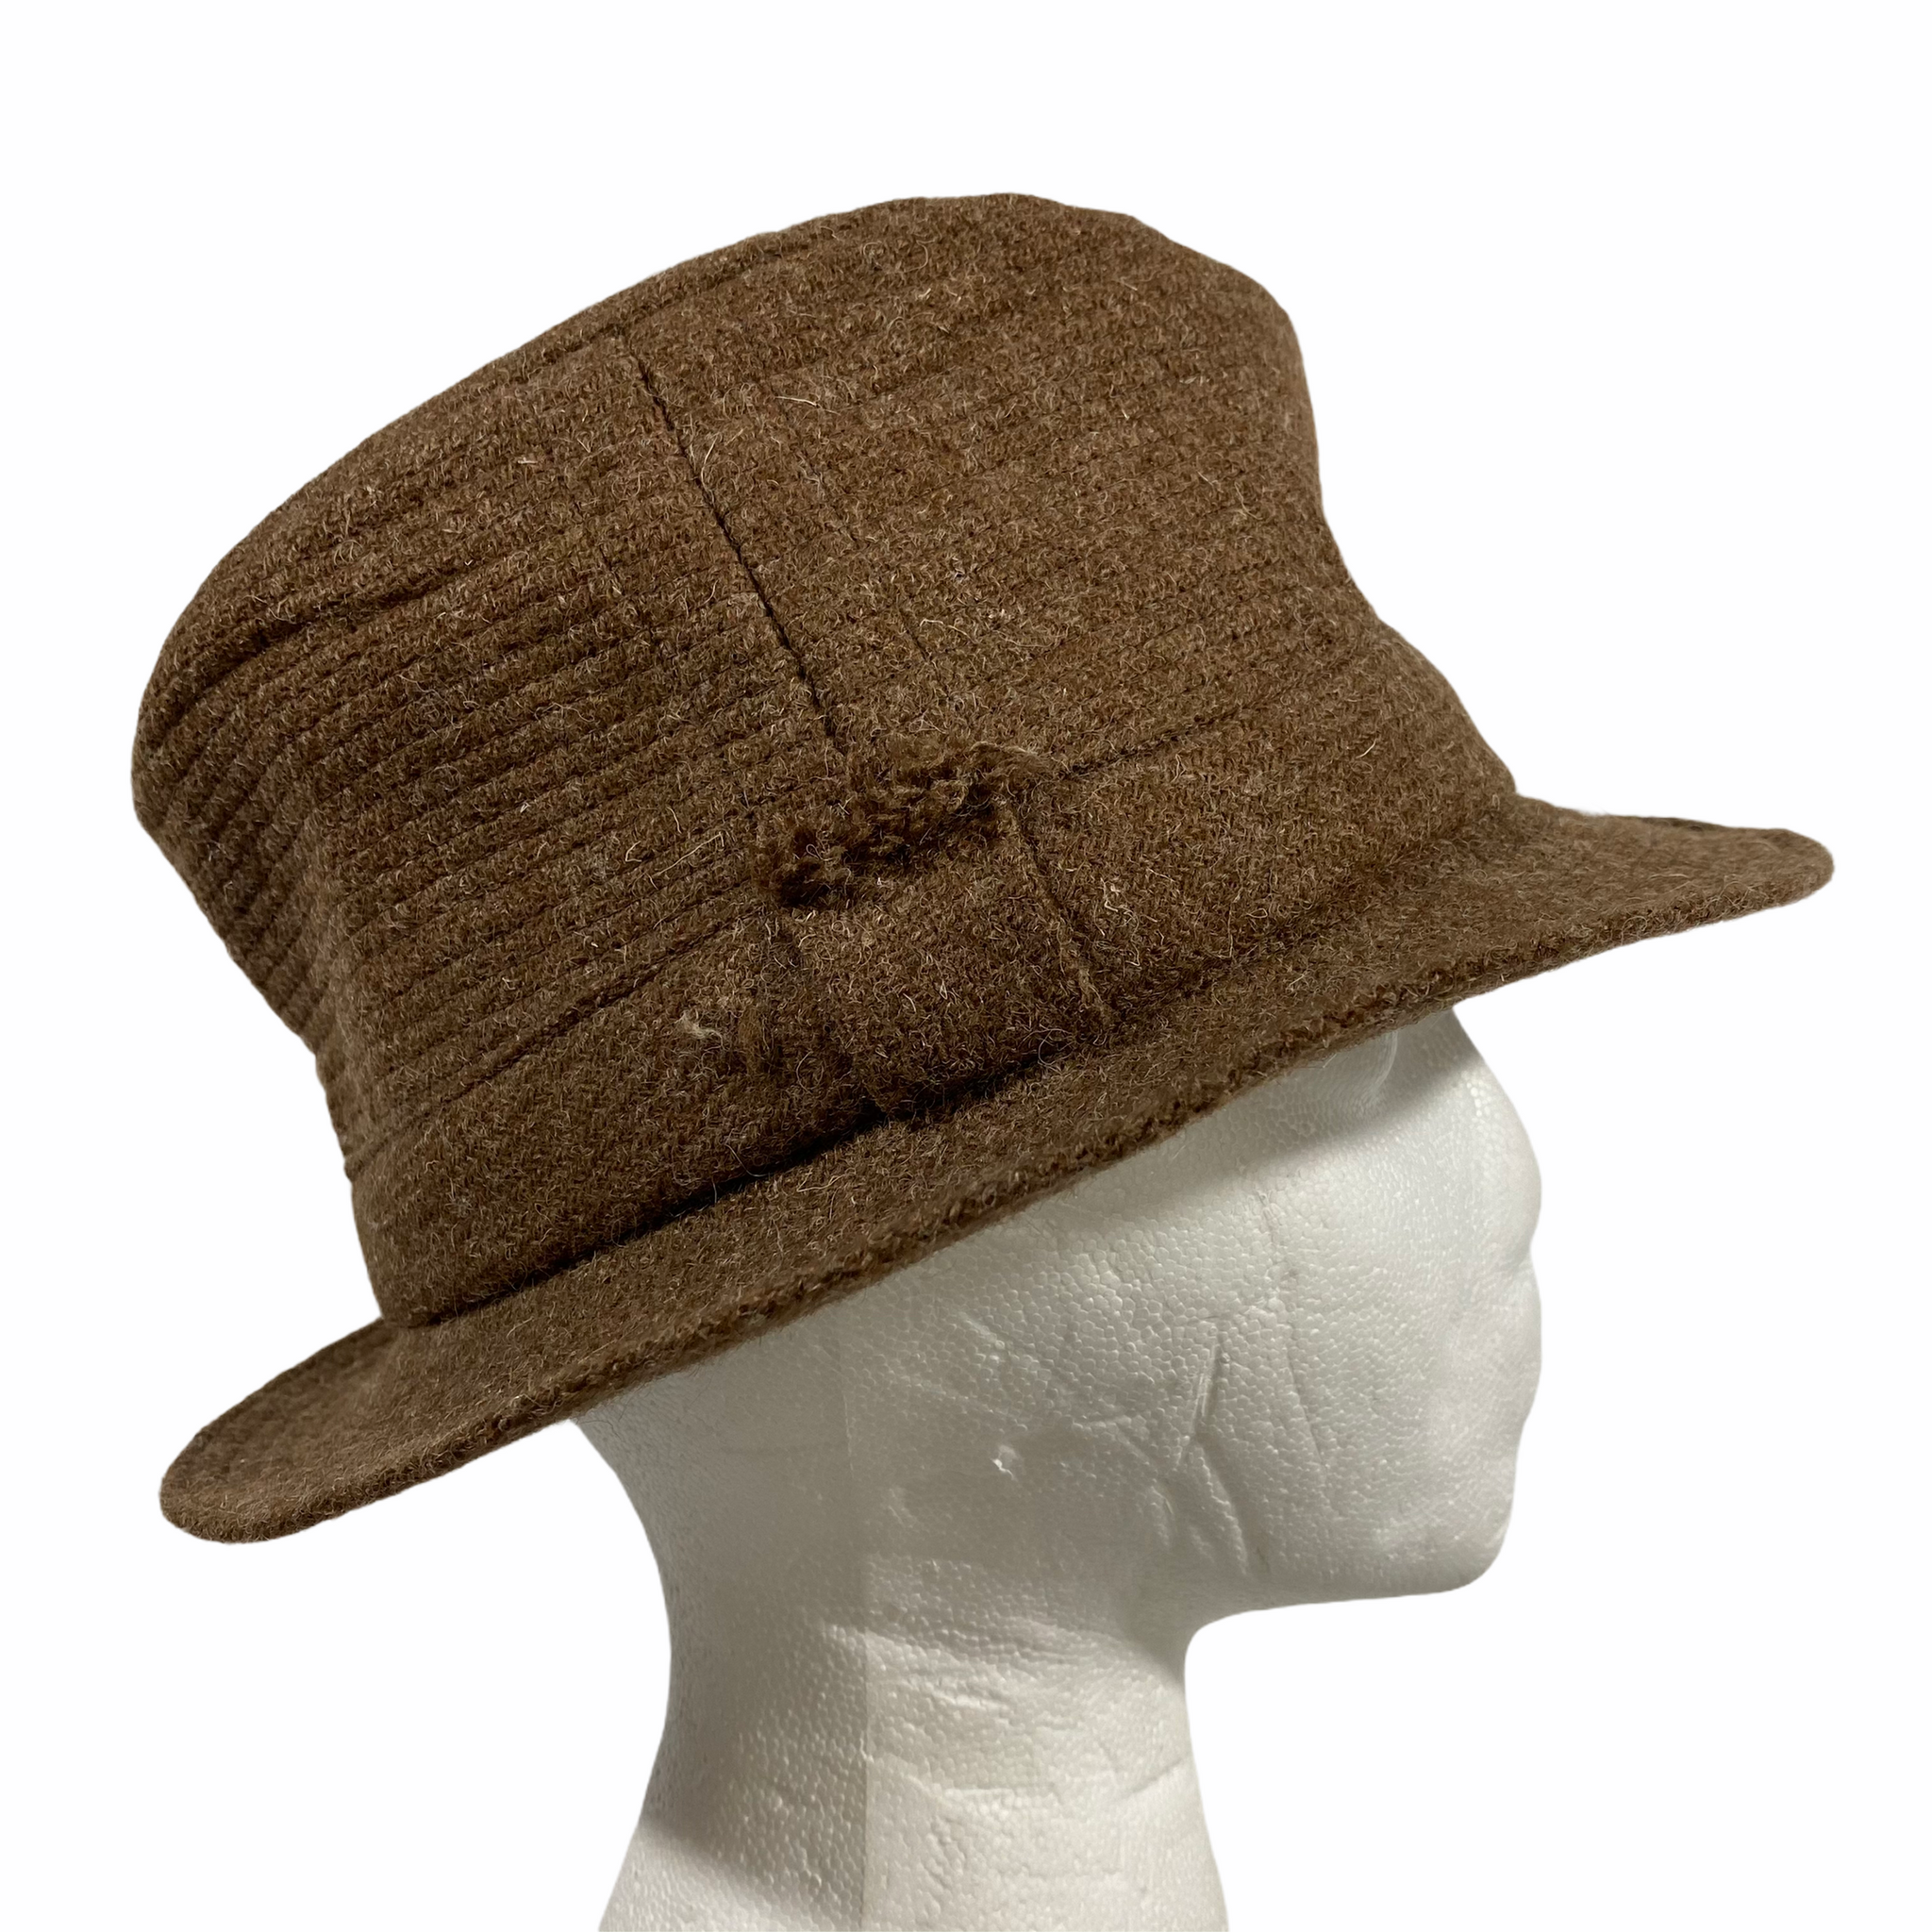 Donegal tweed hat. 7 1/8